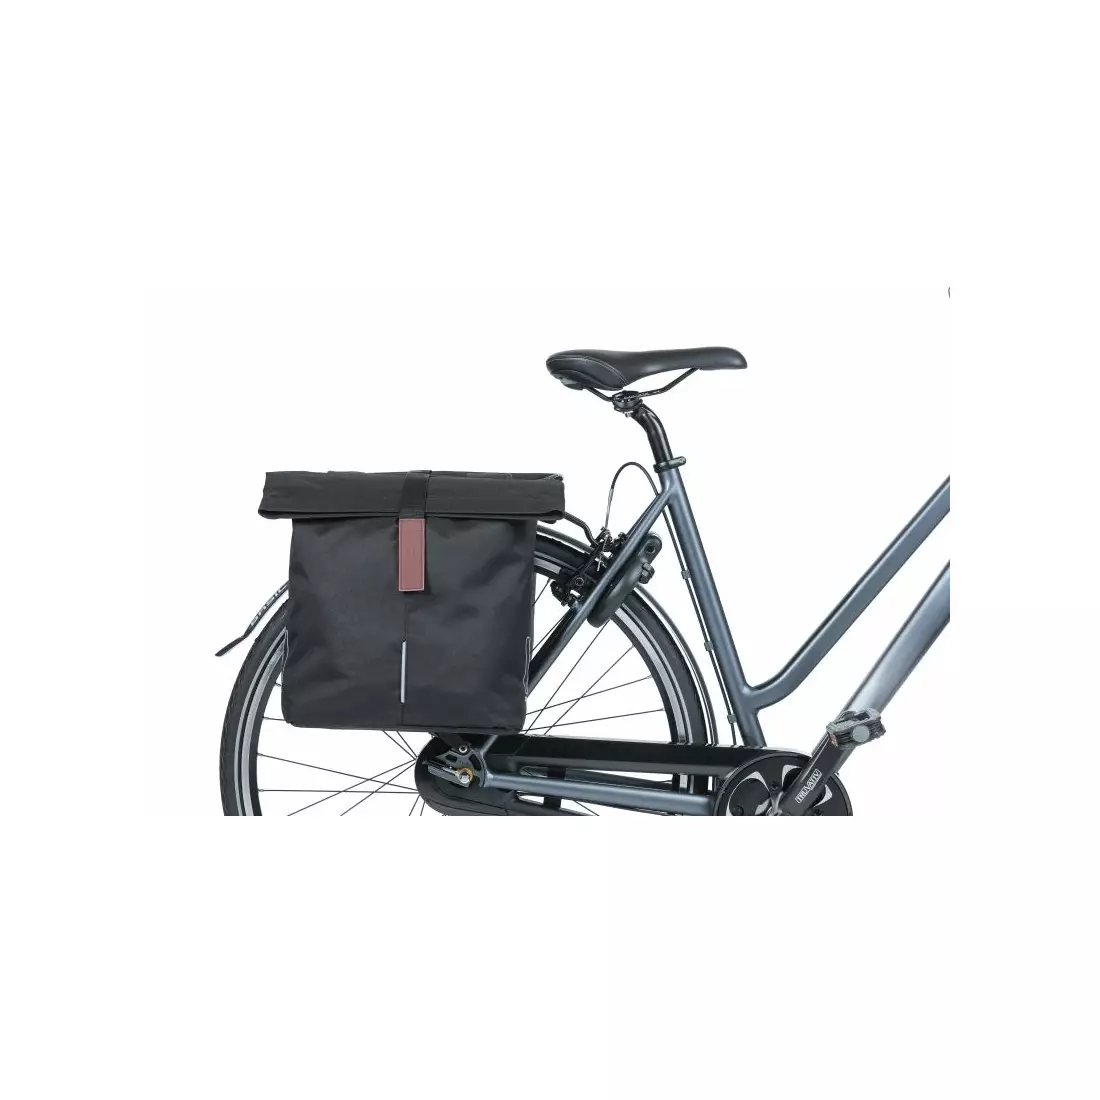 BASIL Fahrradtaschen hinten CITY DOUBLE BAG 32L black 18071